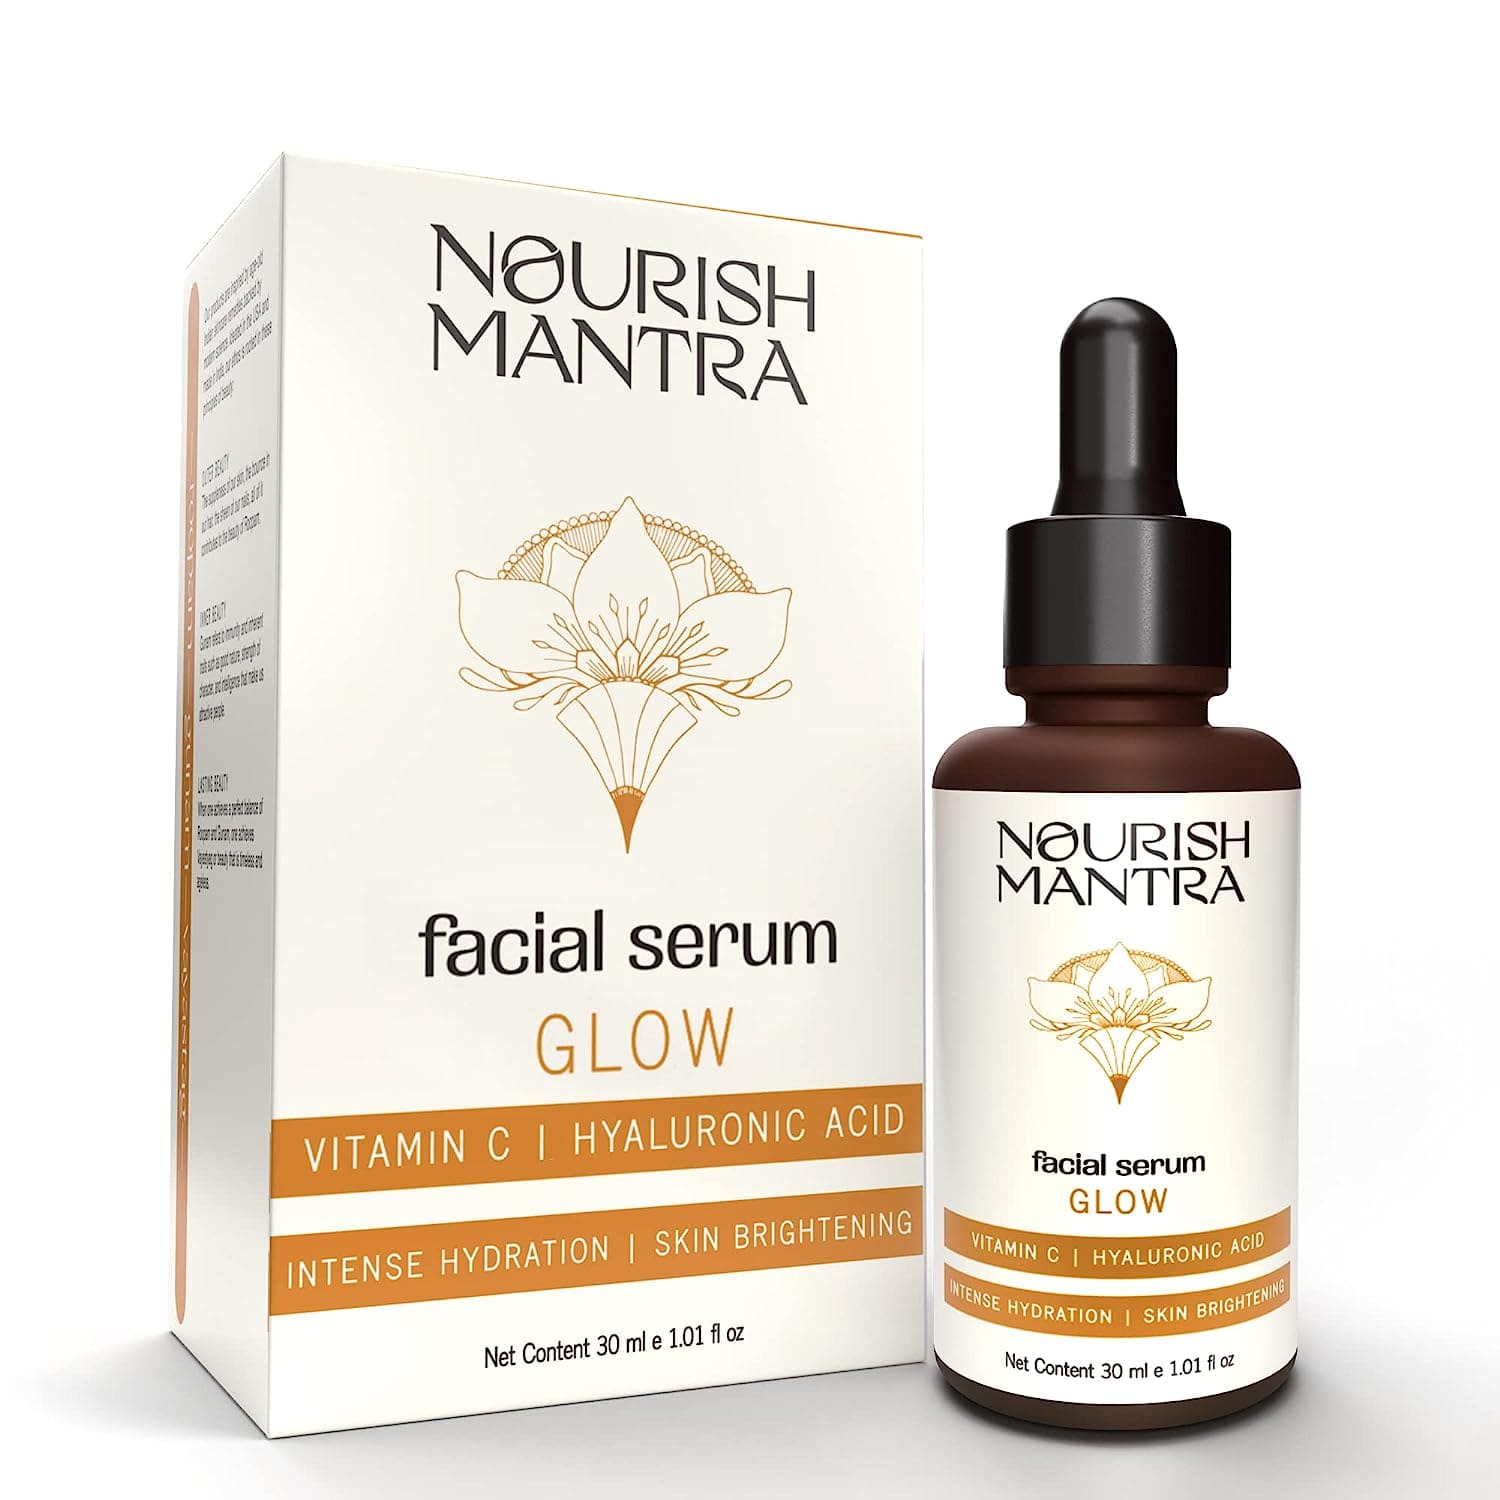 Nourish Mantra Glow facial serum